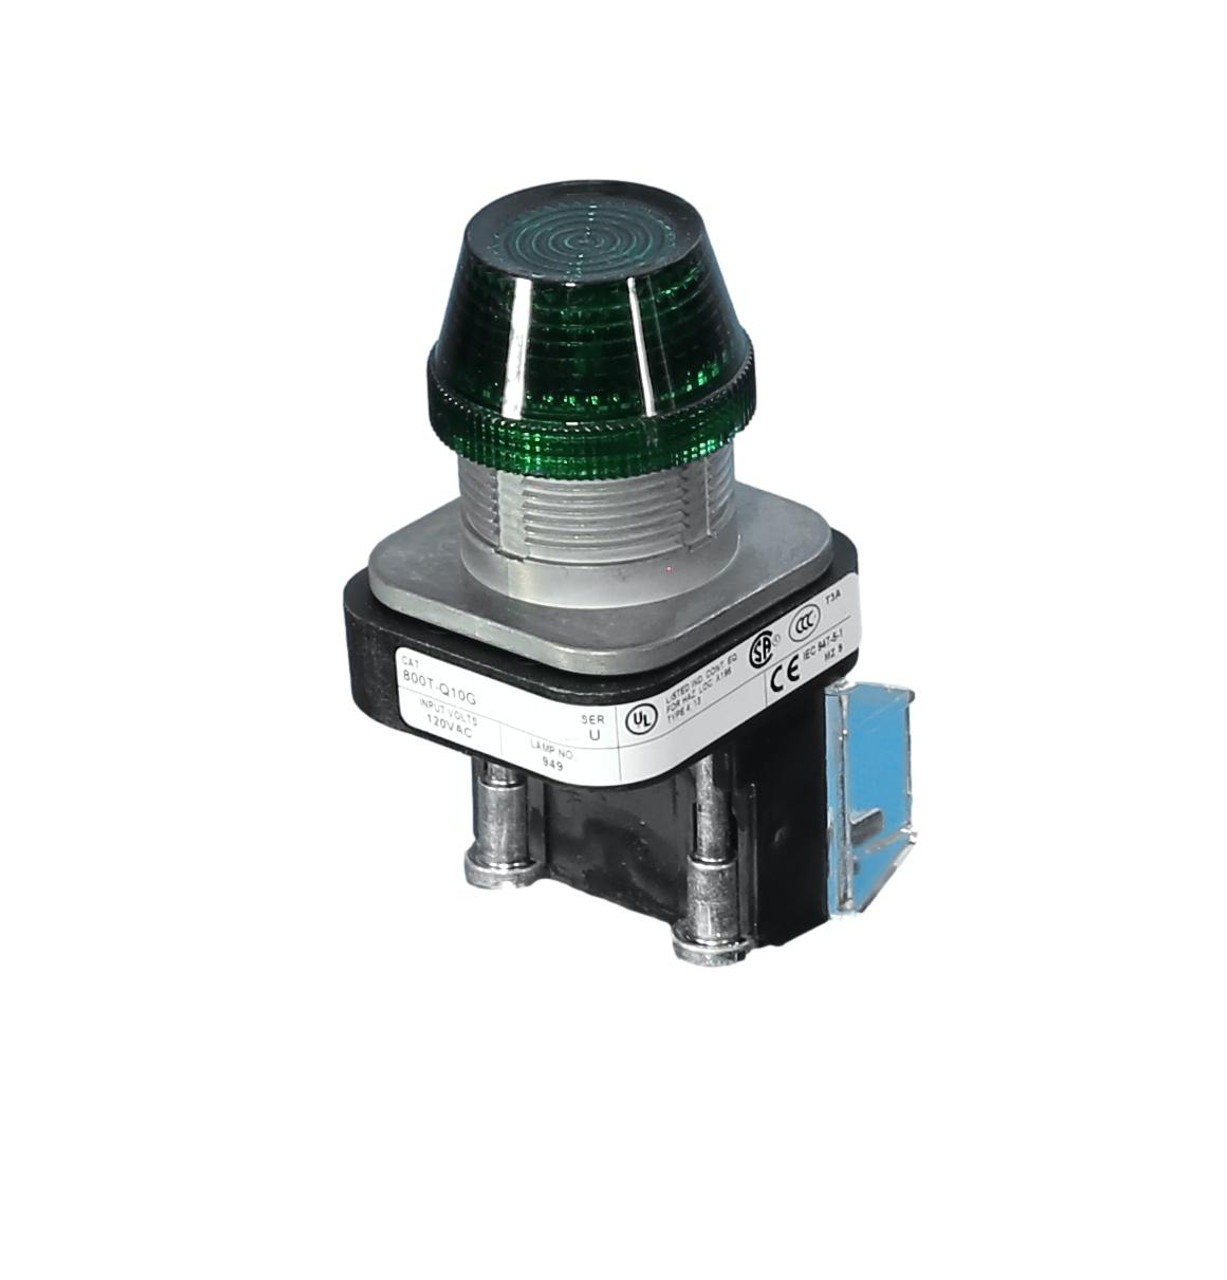 800T-Q10
Pilot Light Green Lens